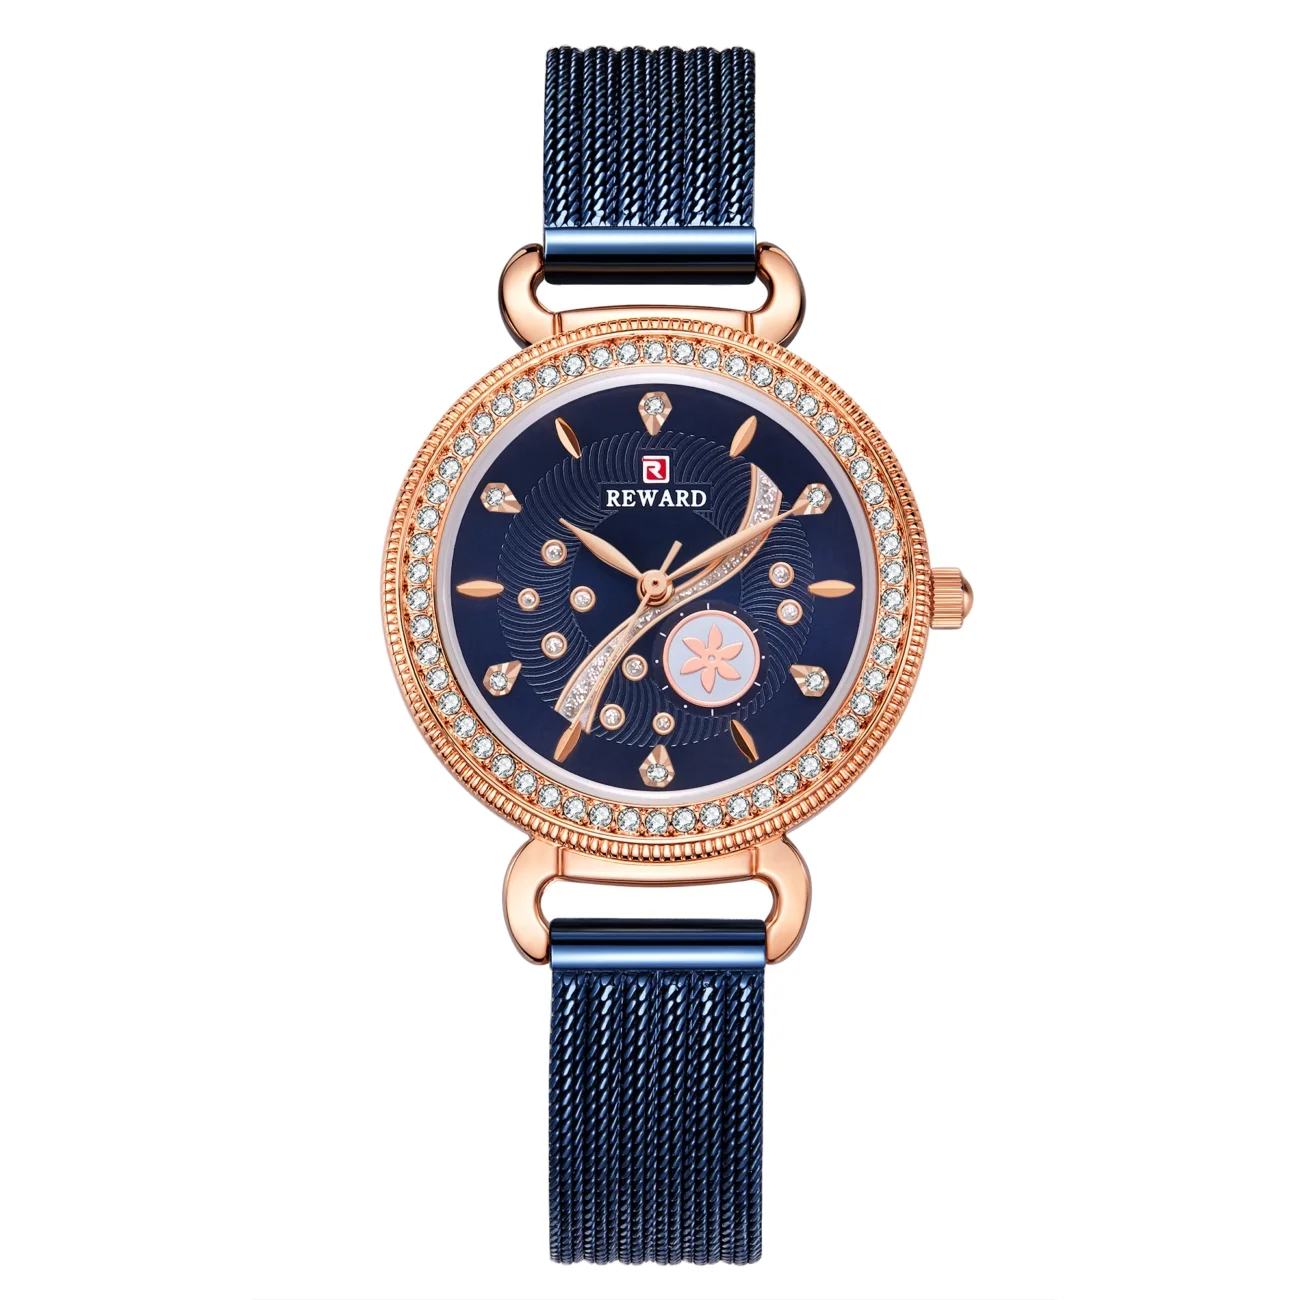 REWARD Luxury Watch Top Quality Women's Watches manufacturing diamond Waterproof Ladies Women Wristwatch Clock reloj RD22004L